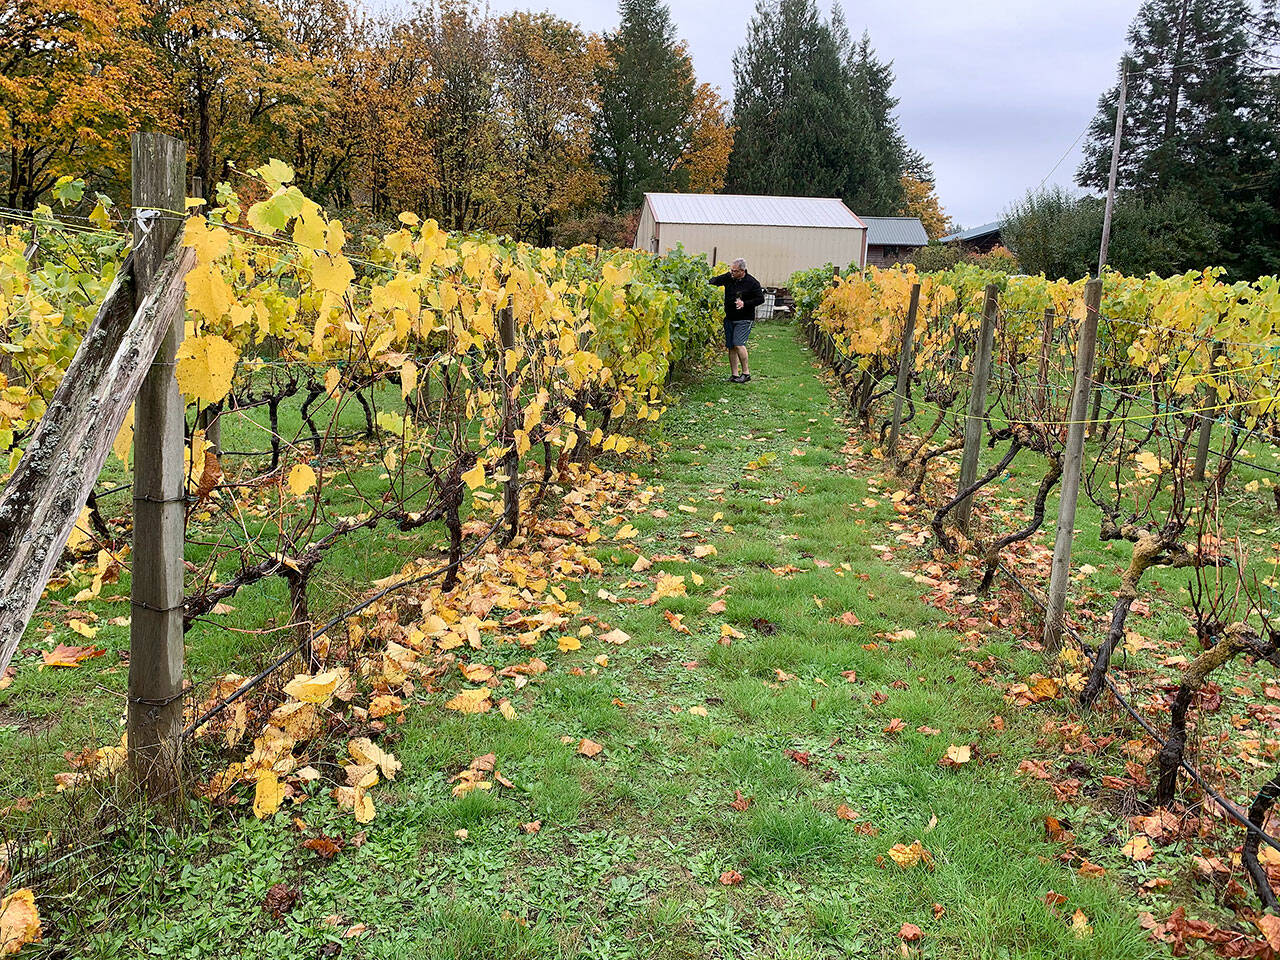 Stuart Chisholm checks for buds in the winery’s vineyard. (Bob Smith | Kitsap Daily News)